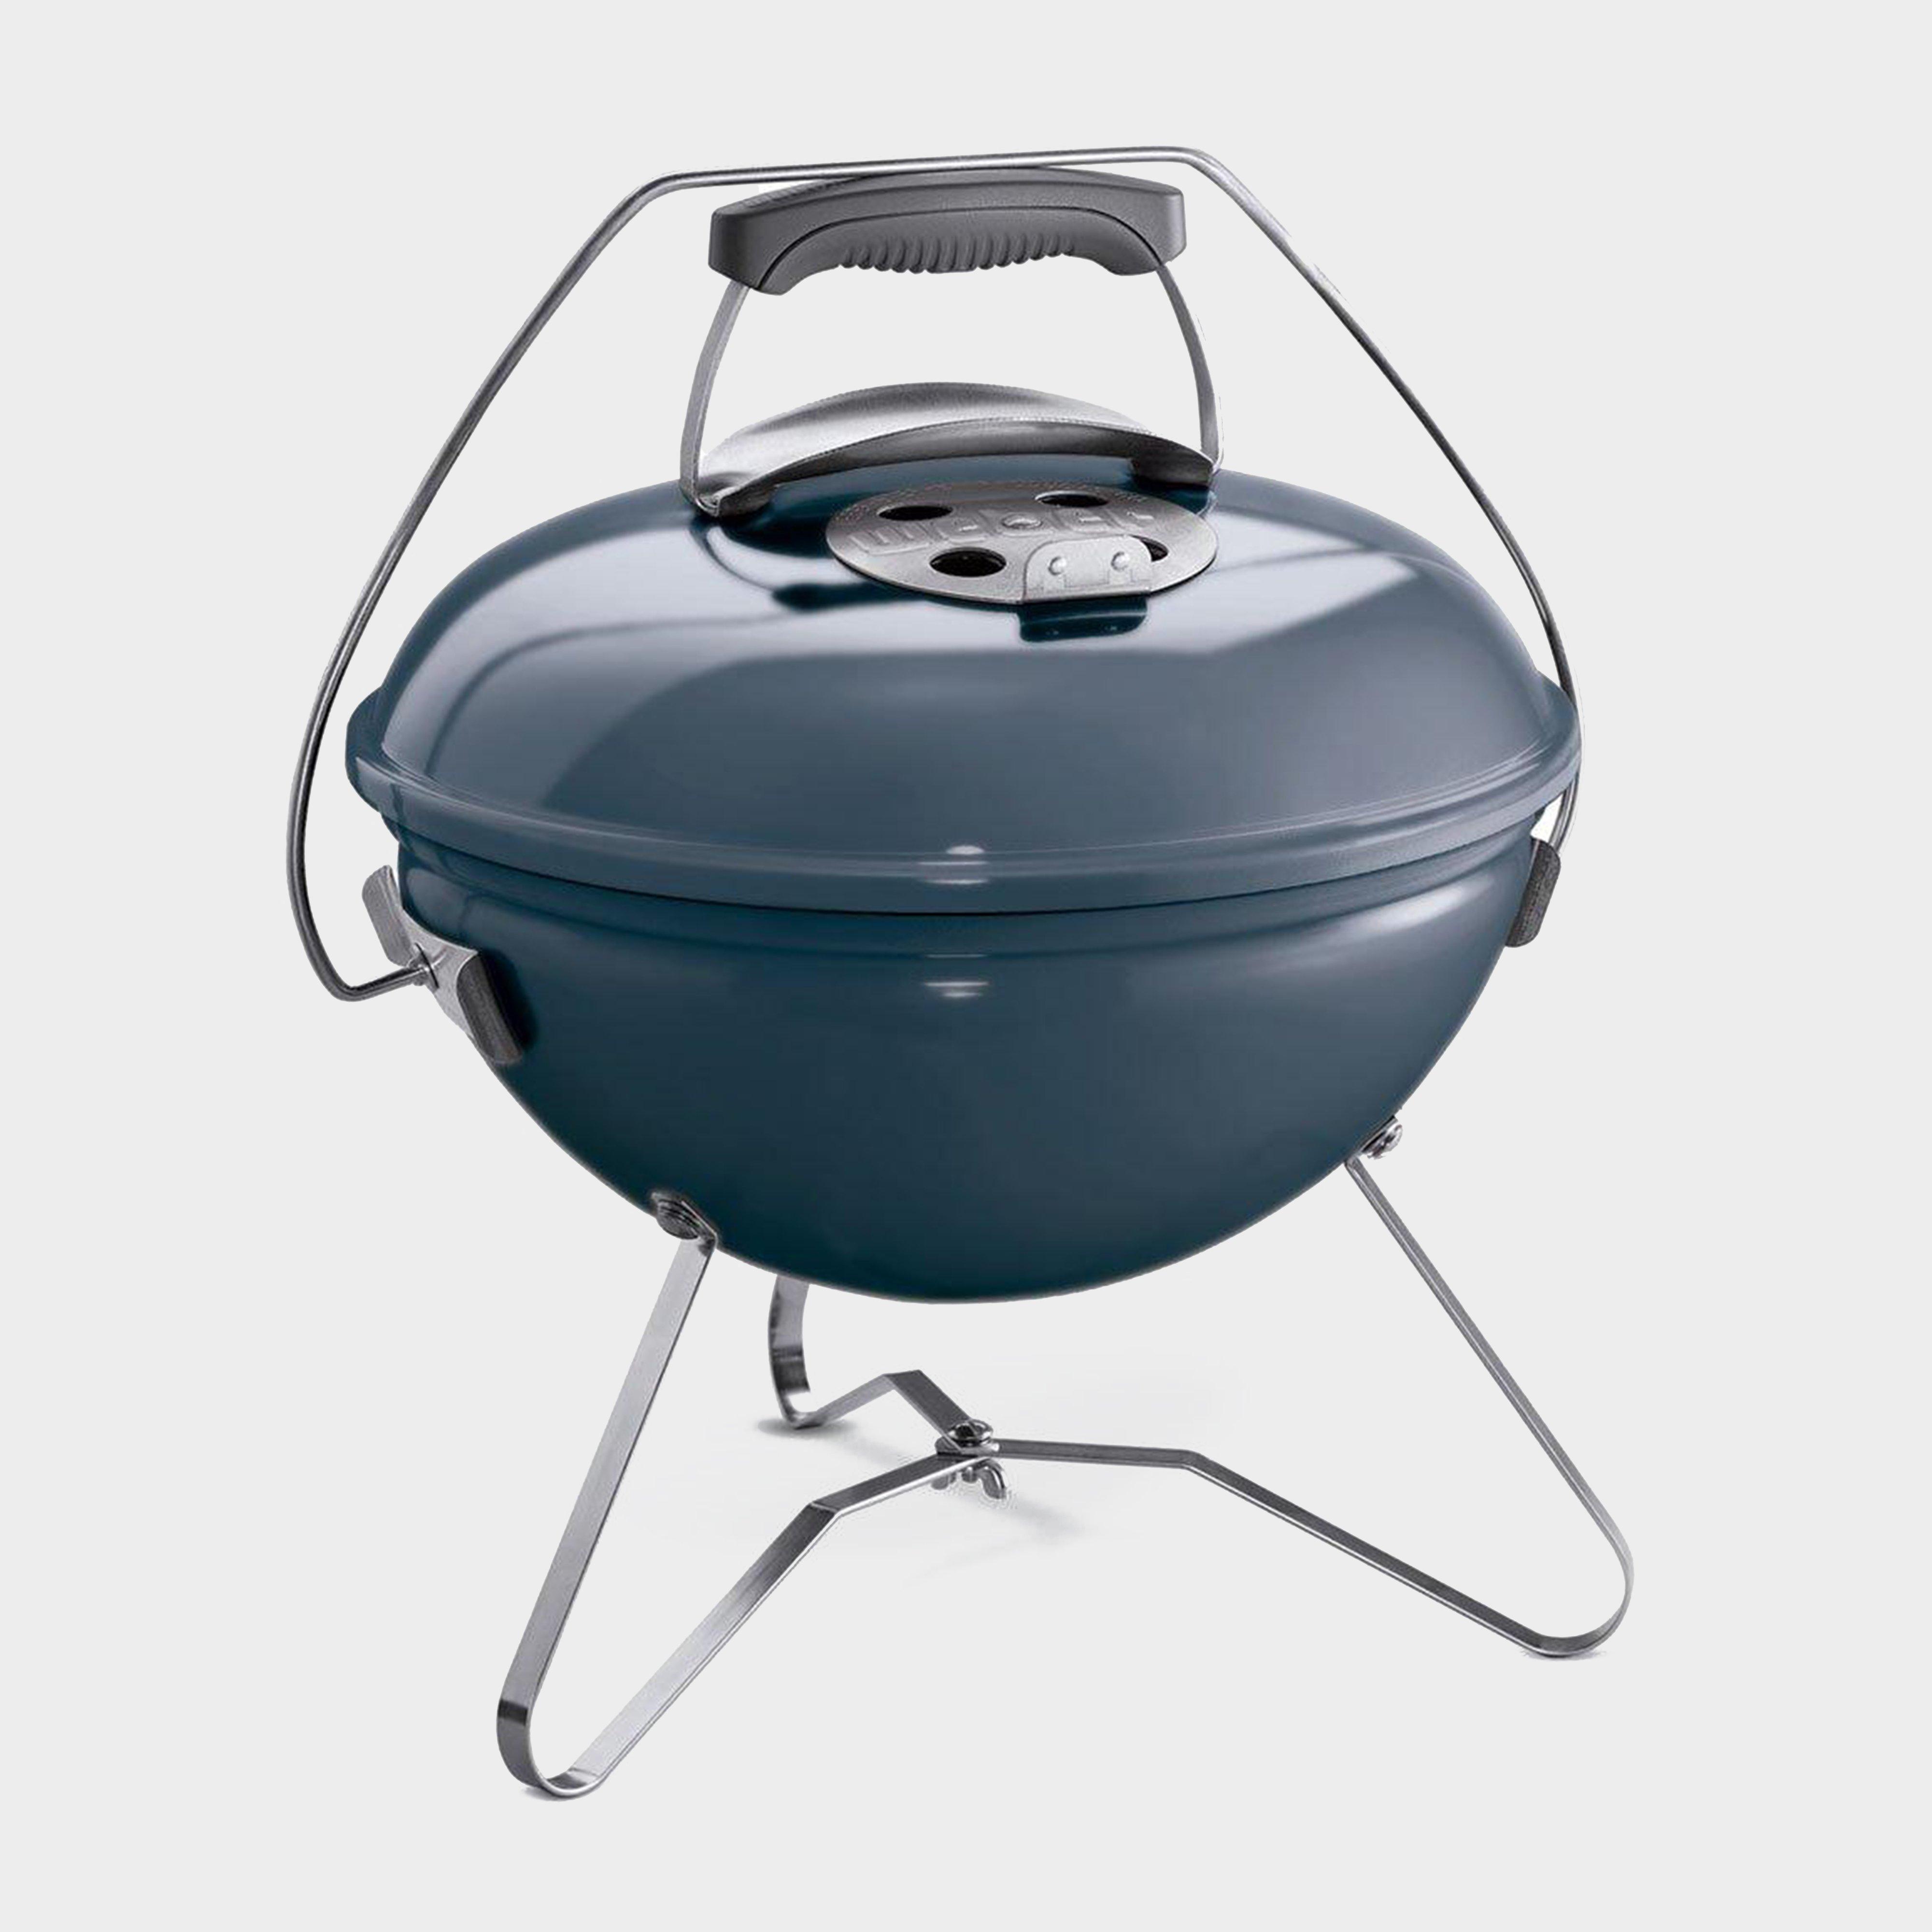  Weber Smokey Joe Premium Charcoal Barbecue (37cm), Navy